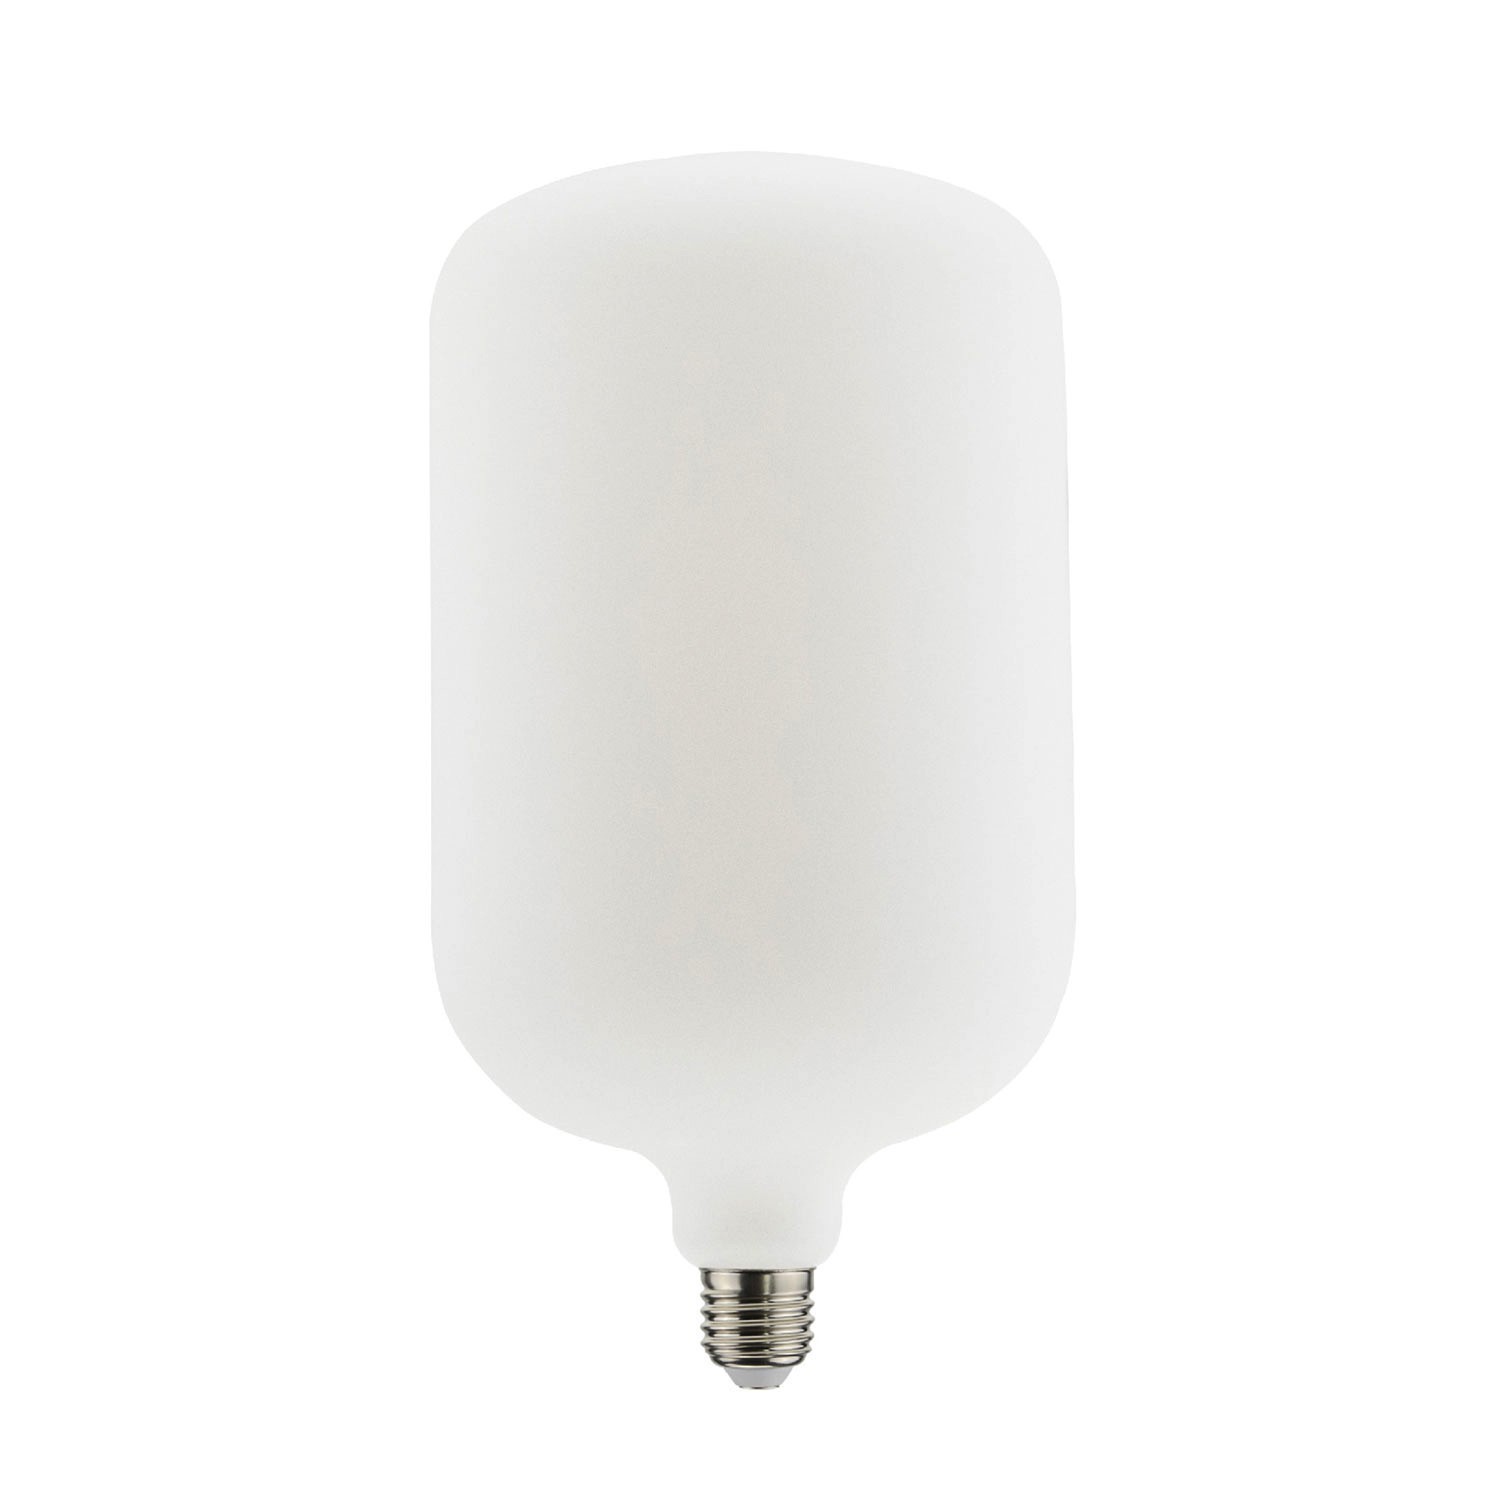 LED Porcelain Light Bulb Candy XL 13W 1521Lm E27 2700K Dimmable